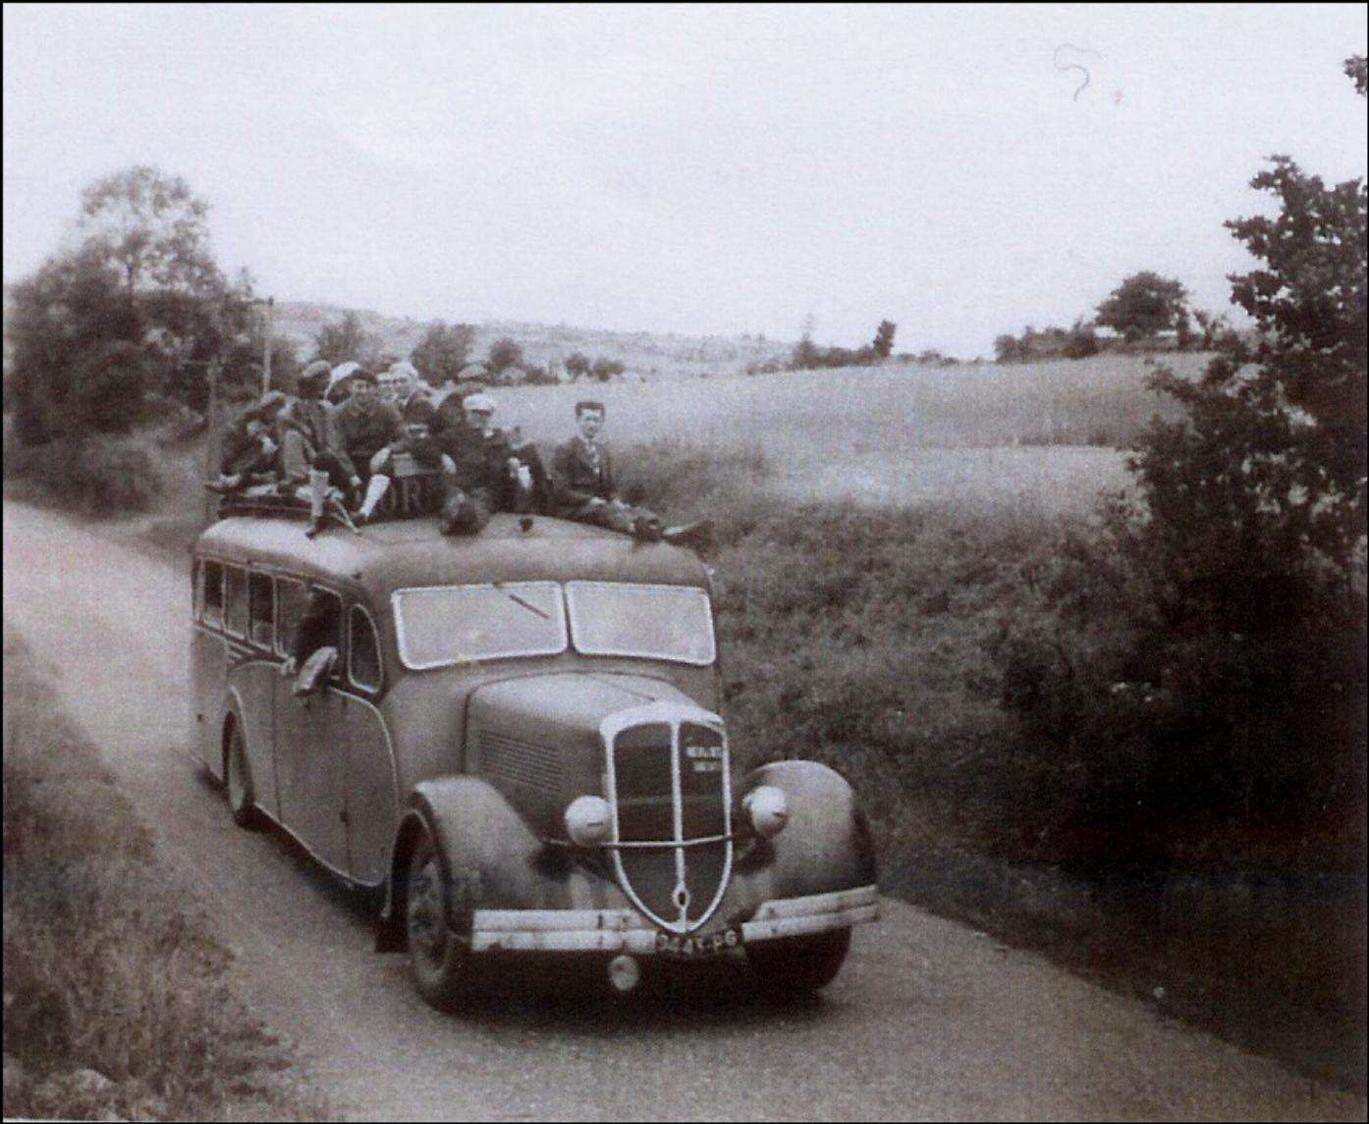 A Marius Jasserand vehicle some time before 1939